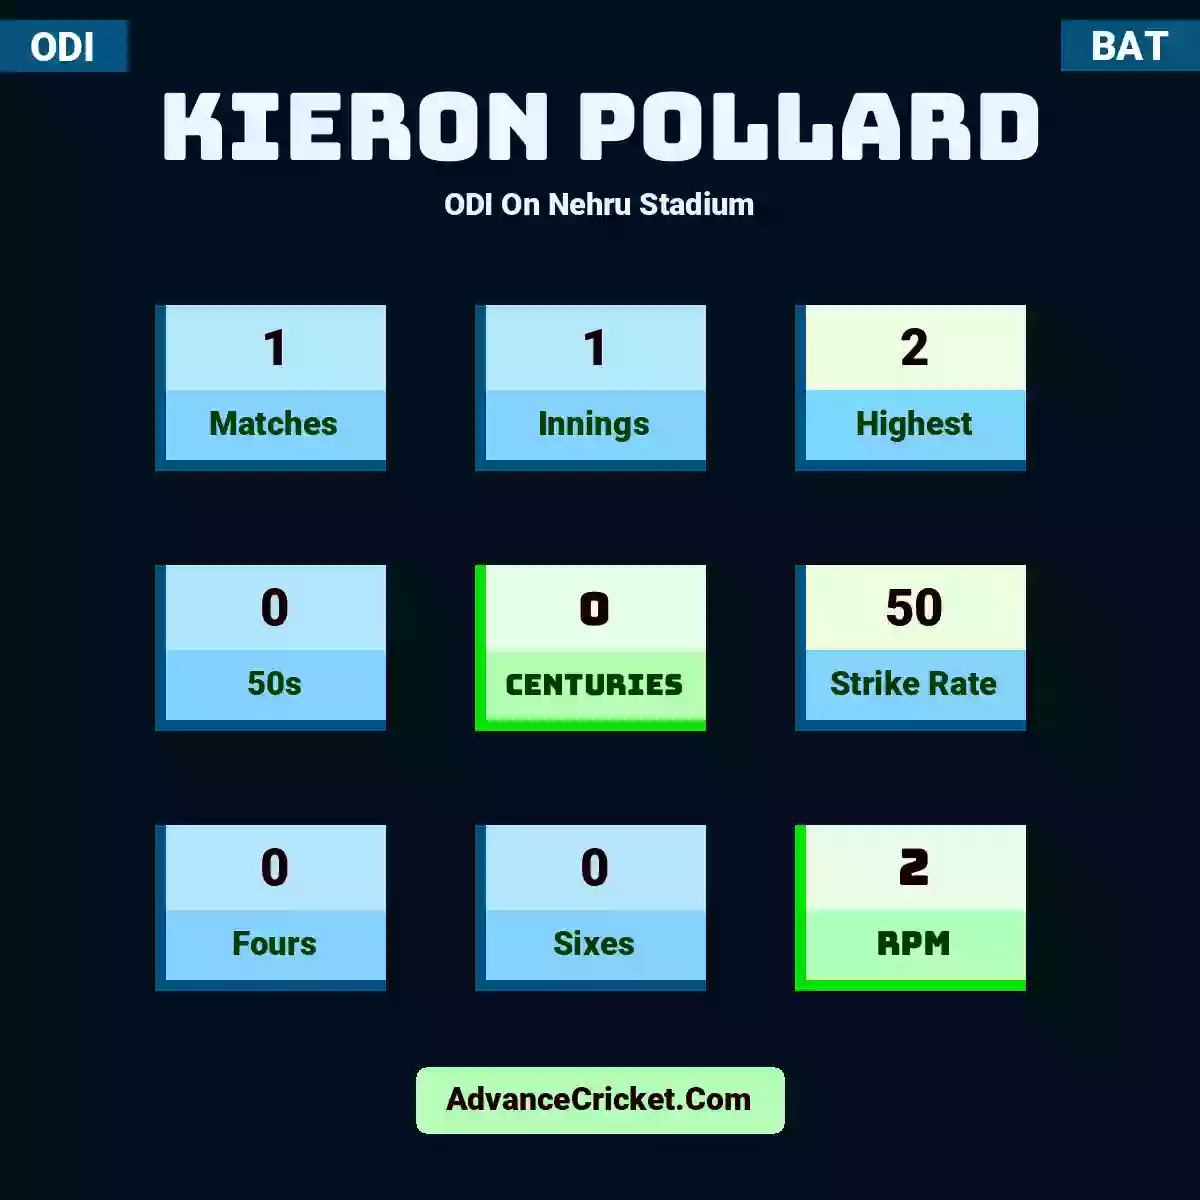 Kieron Pollard ODI  On Nehru Stadium, Kieron Pollard played 1 matches, scored 2 runs as highest, 0 half-centuries, and 0 centuries, with a strike rate of 50. K.Pollard hit 0 fours and 0 sixes, with an RPM of 2.